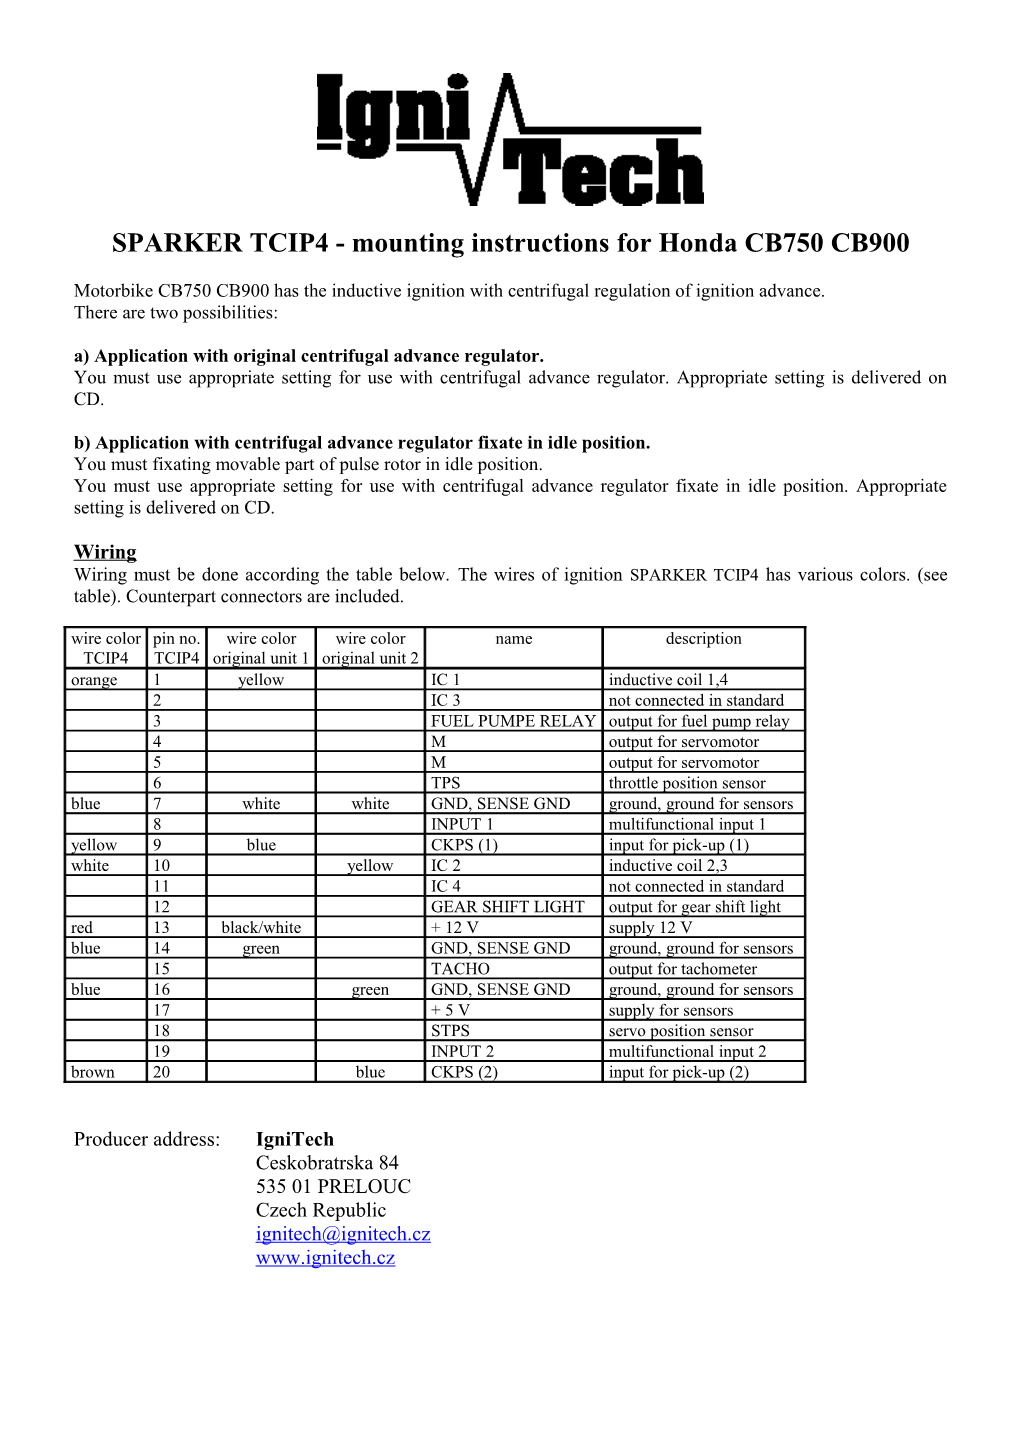 SPARKER TCIP4 - Mounting Instructions for Honda CB750 CB900